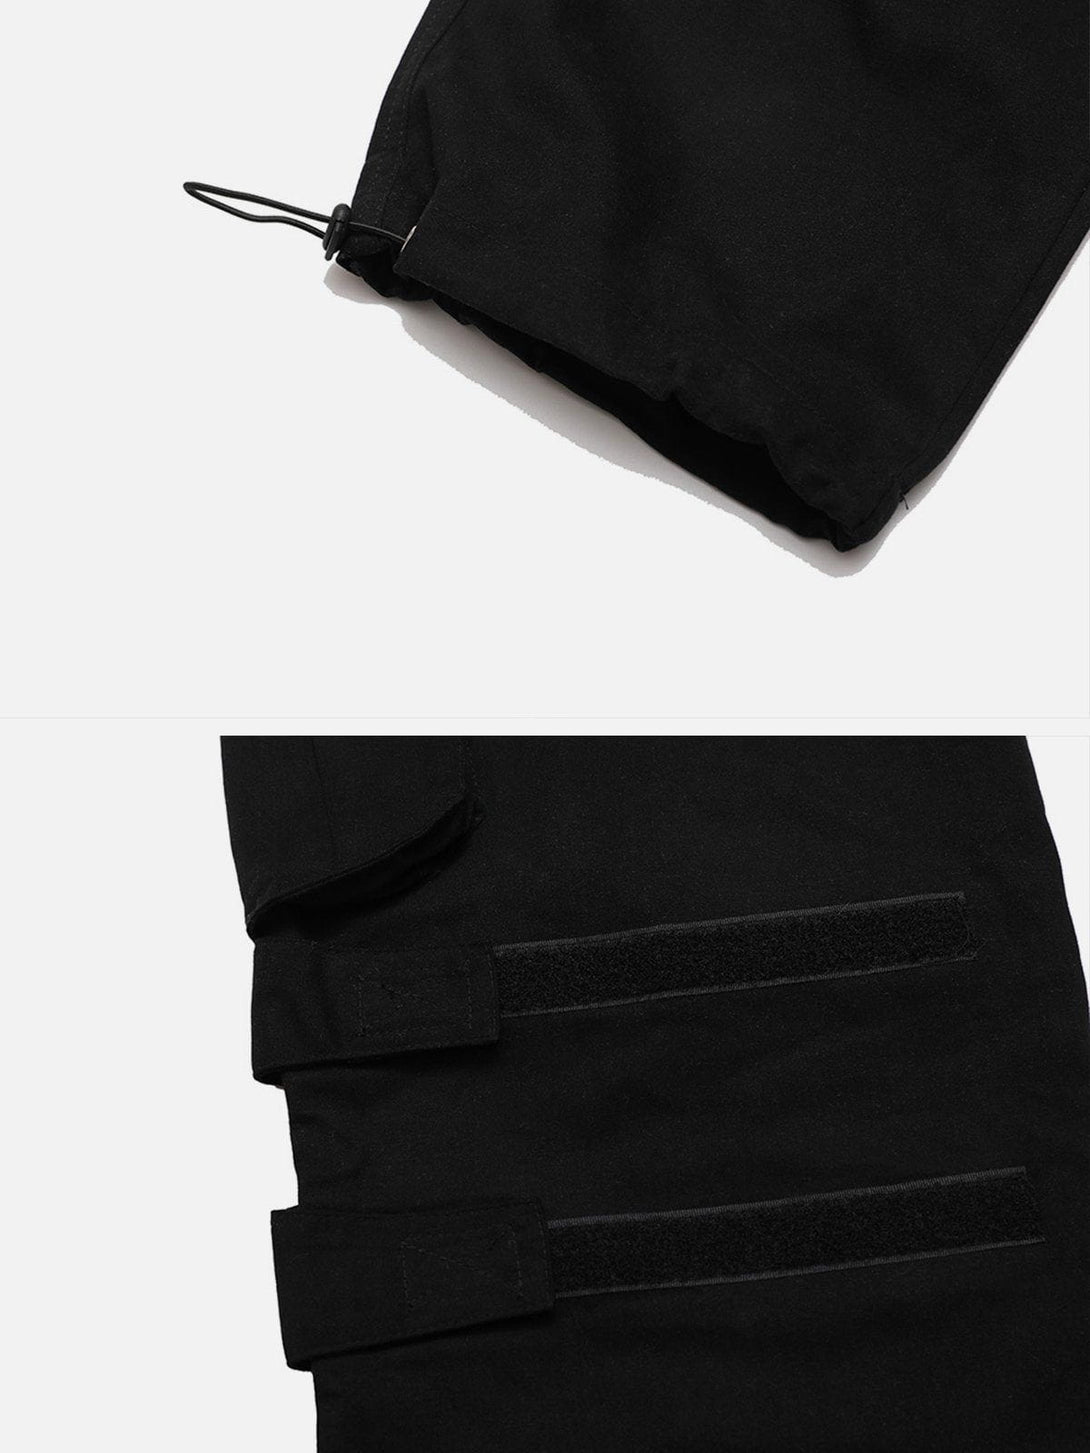 AlanBalen® - Large Multiple Pockets Velcro Cargo Pants AlanBalen